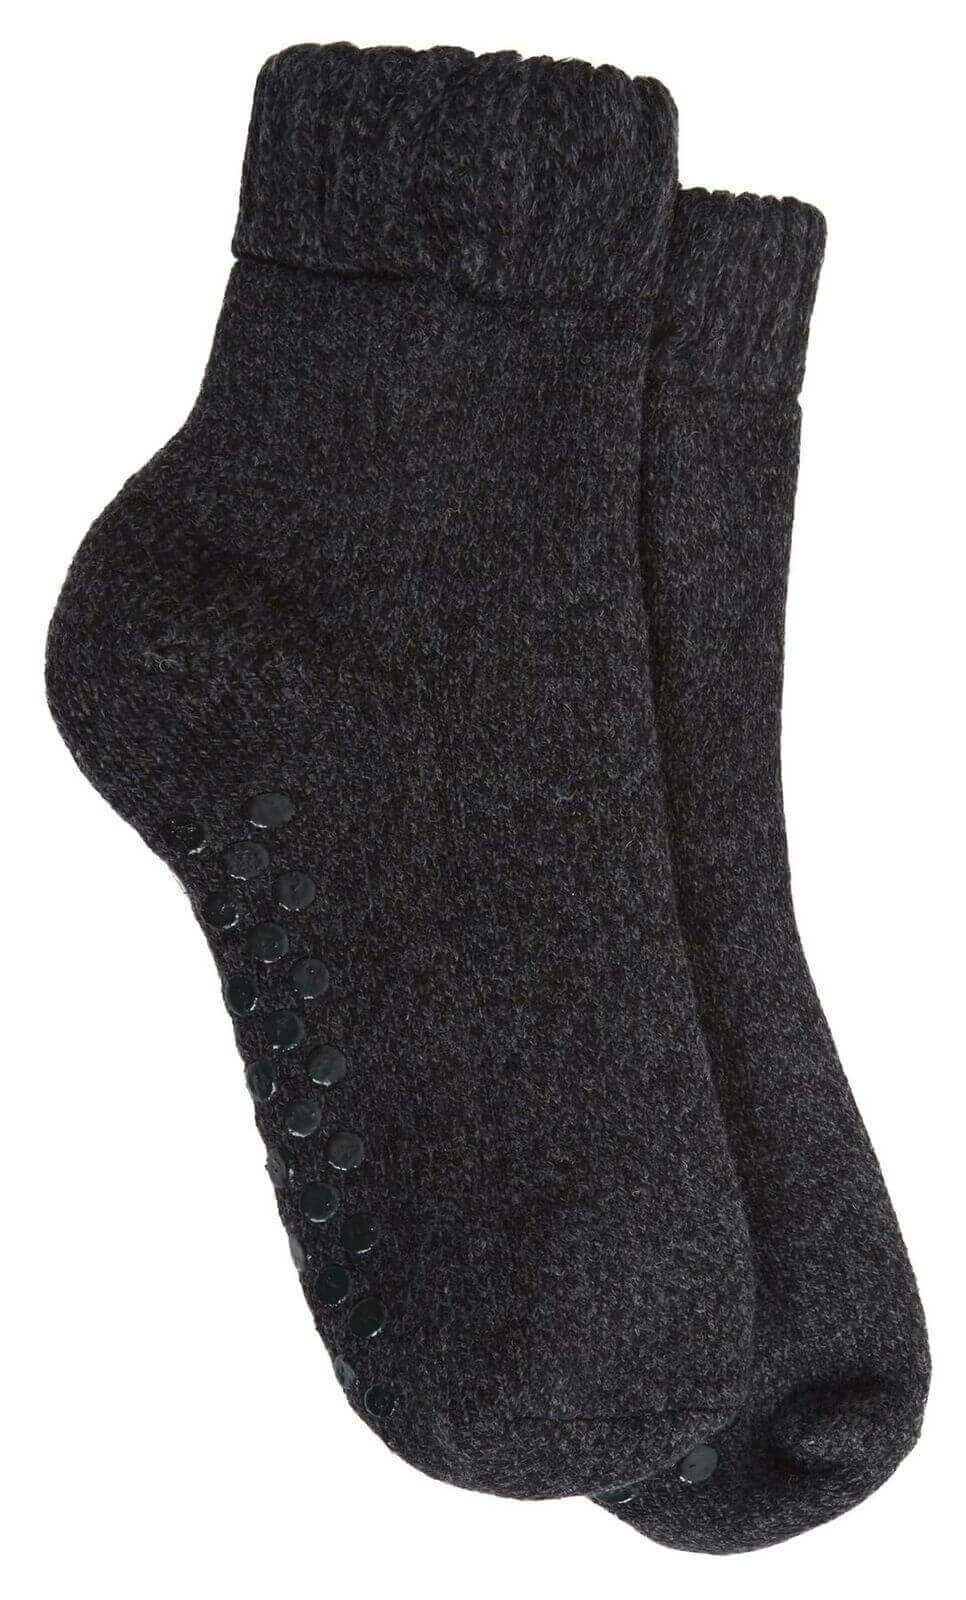 2 Pairs Of Men's Merino Wool Slipper Socks With Non Slip Soles, Black & Navy. Buy now for £9.00. A Socks by Sock Stack. 6-11, acrylic, assorted, black, boys, boys socks, breathable, clothing, comfortable, elastane, footwear, grip, grip socks, mens, mens s